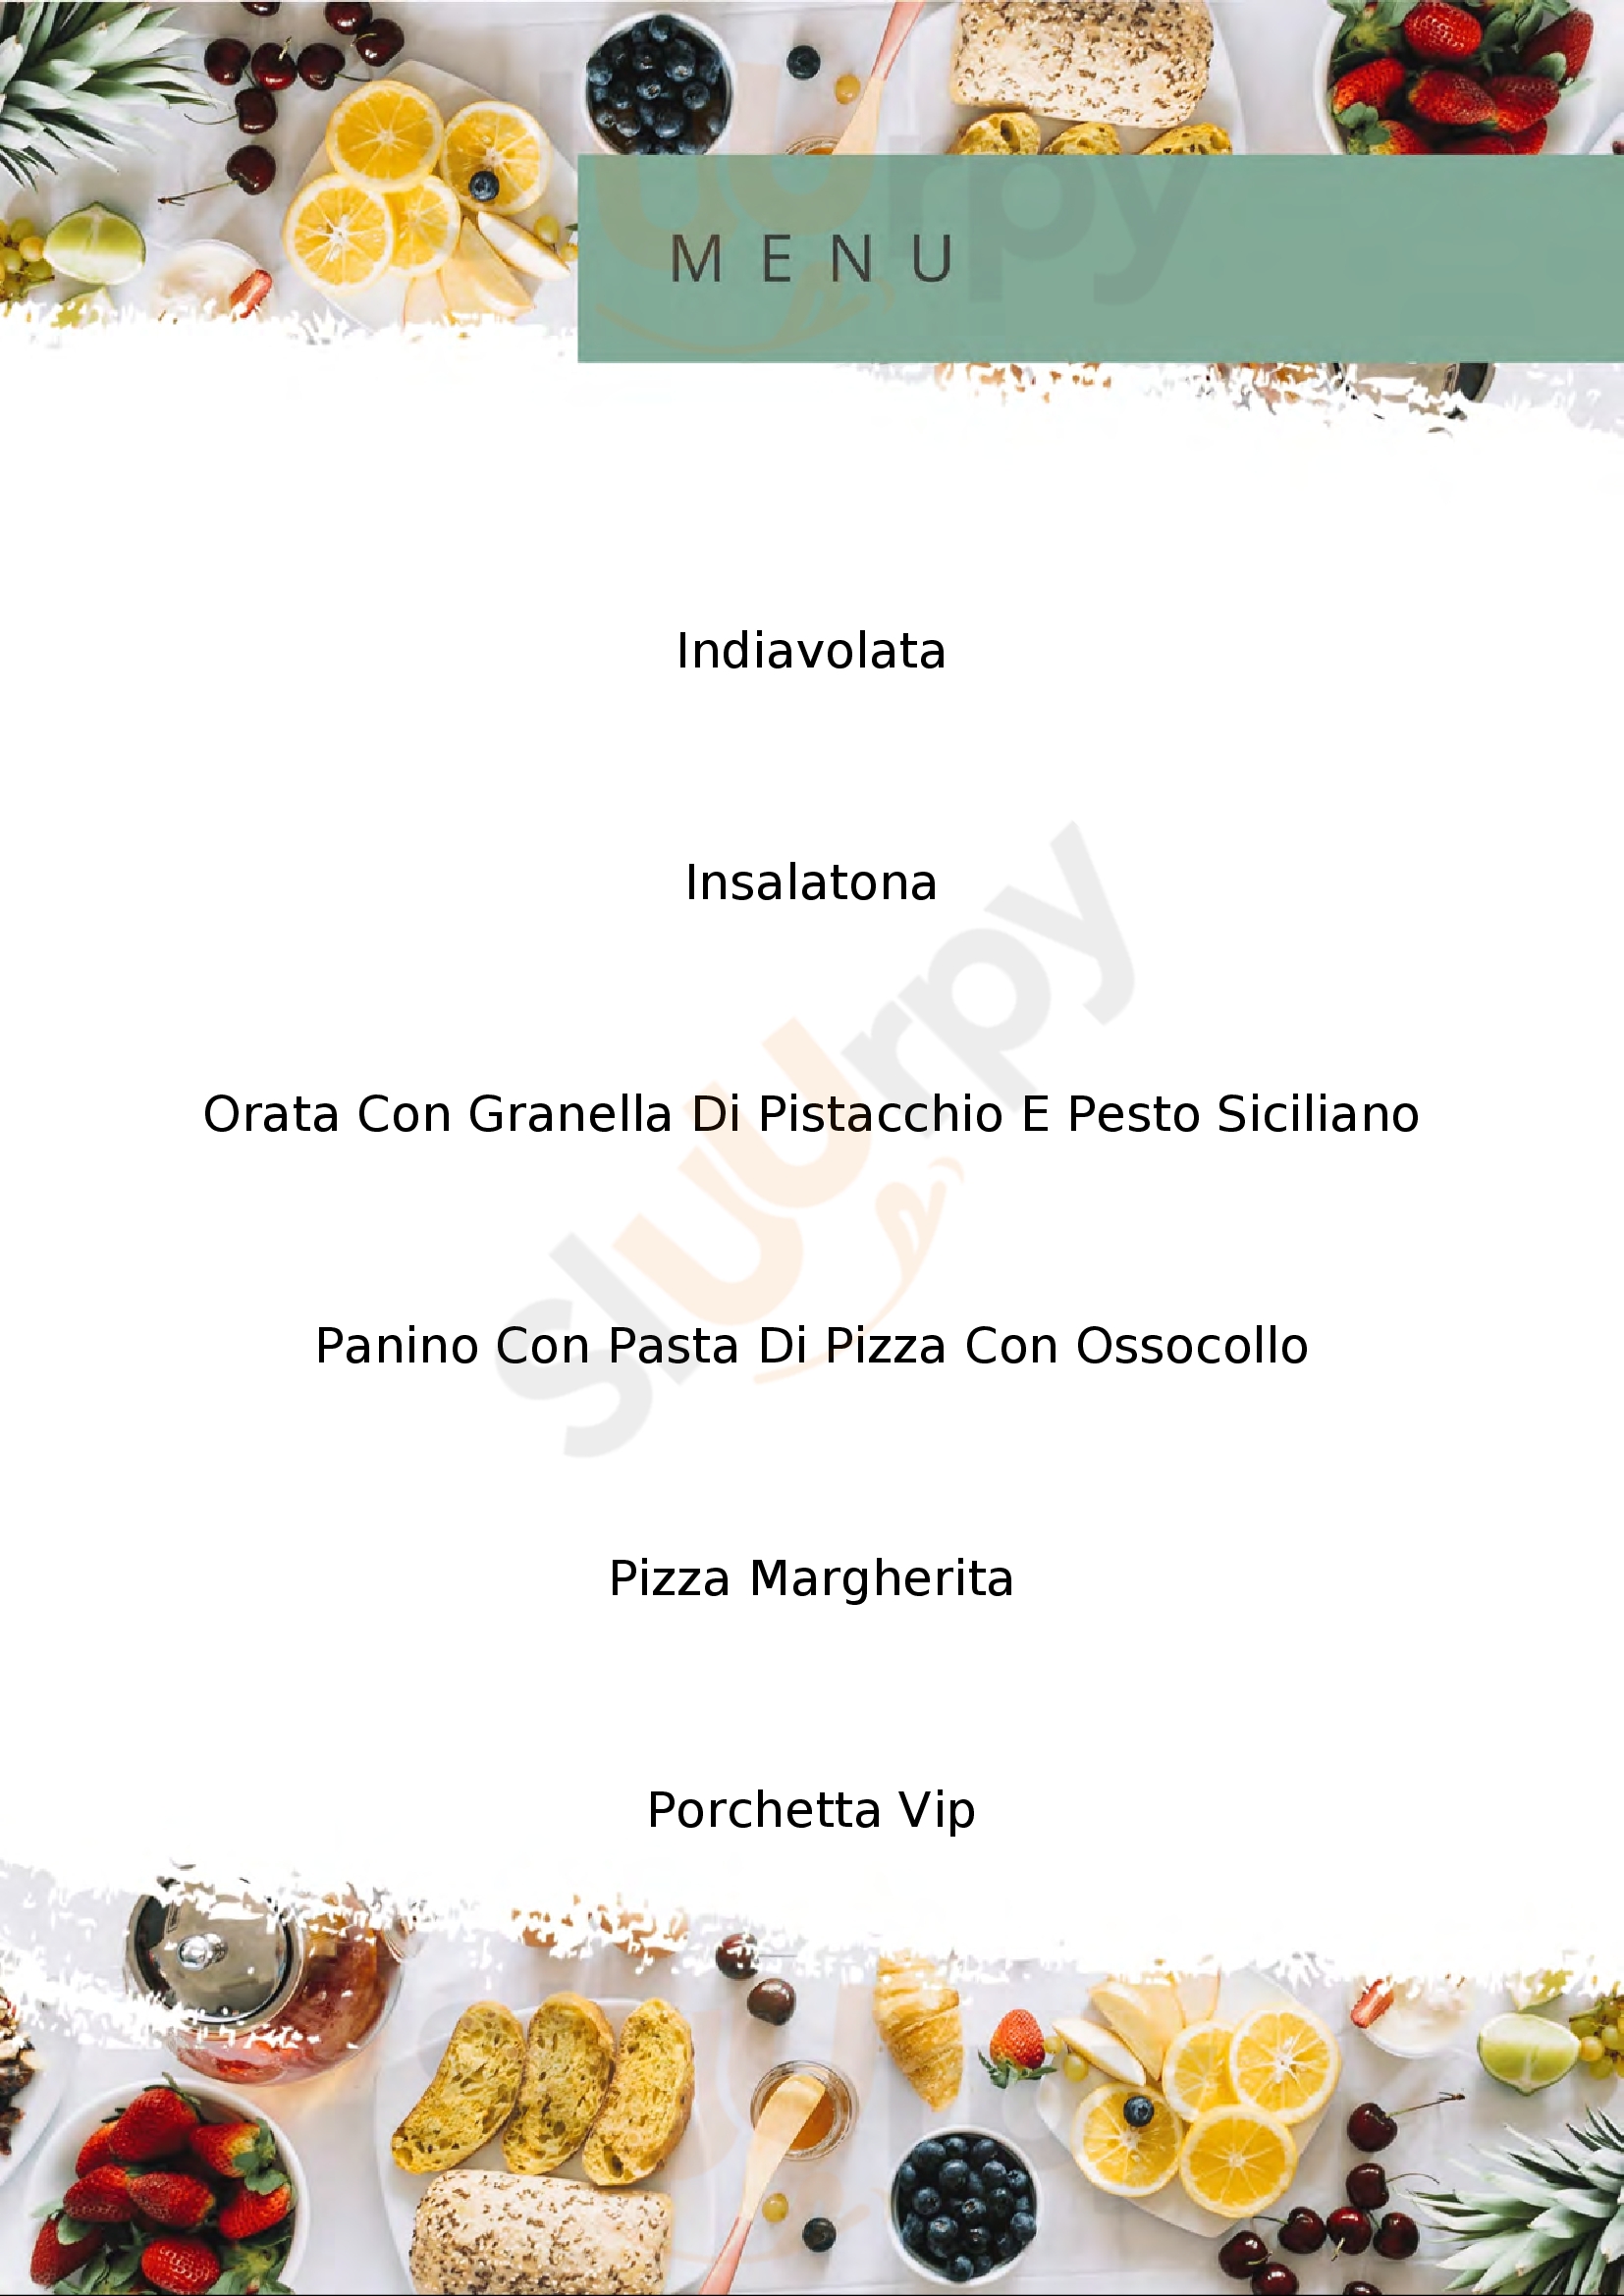 Mejana Restaurant Pizzeria Treviso menù 1 pagina